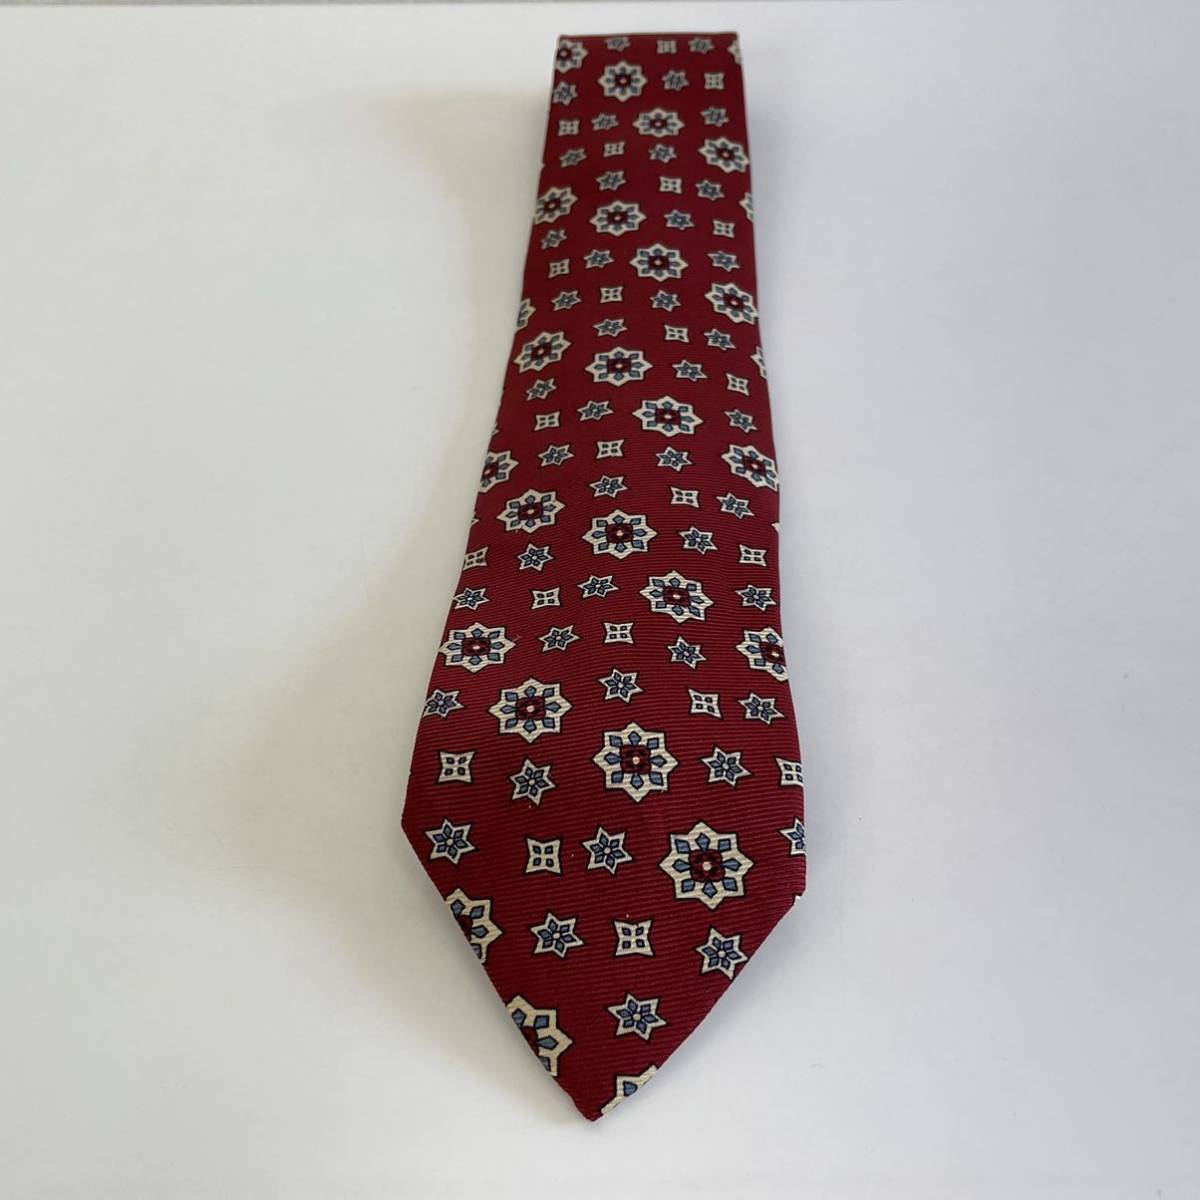 POLO by RALPH LAUREN( Polo bai Ralph Lauren ) red star pattern necktie 